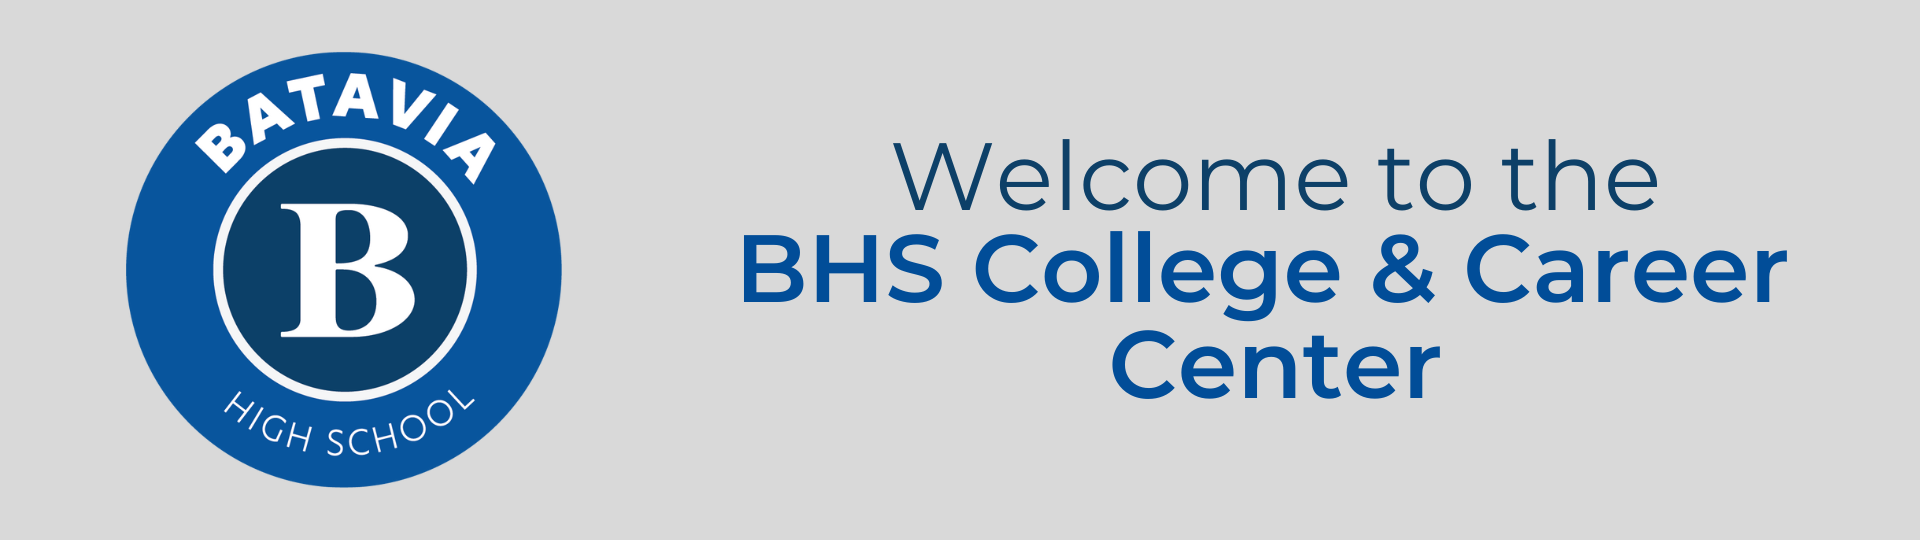 BHS College & Career Center